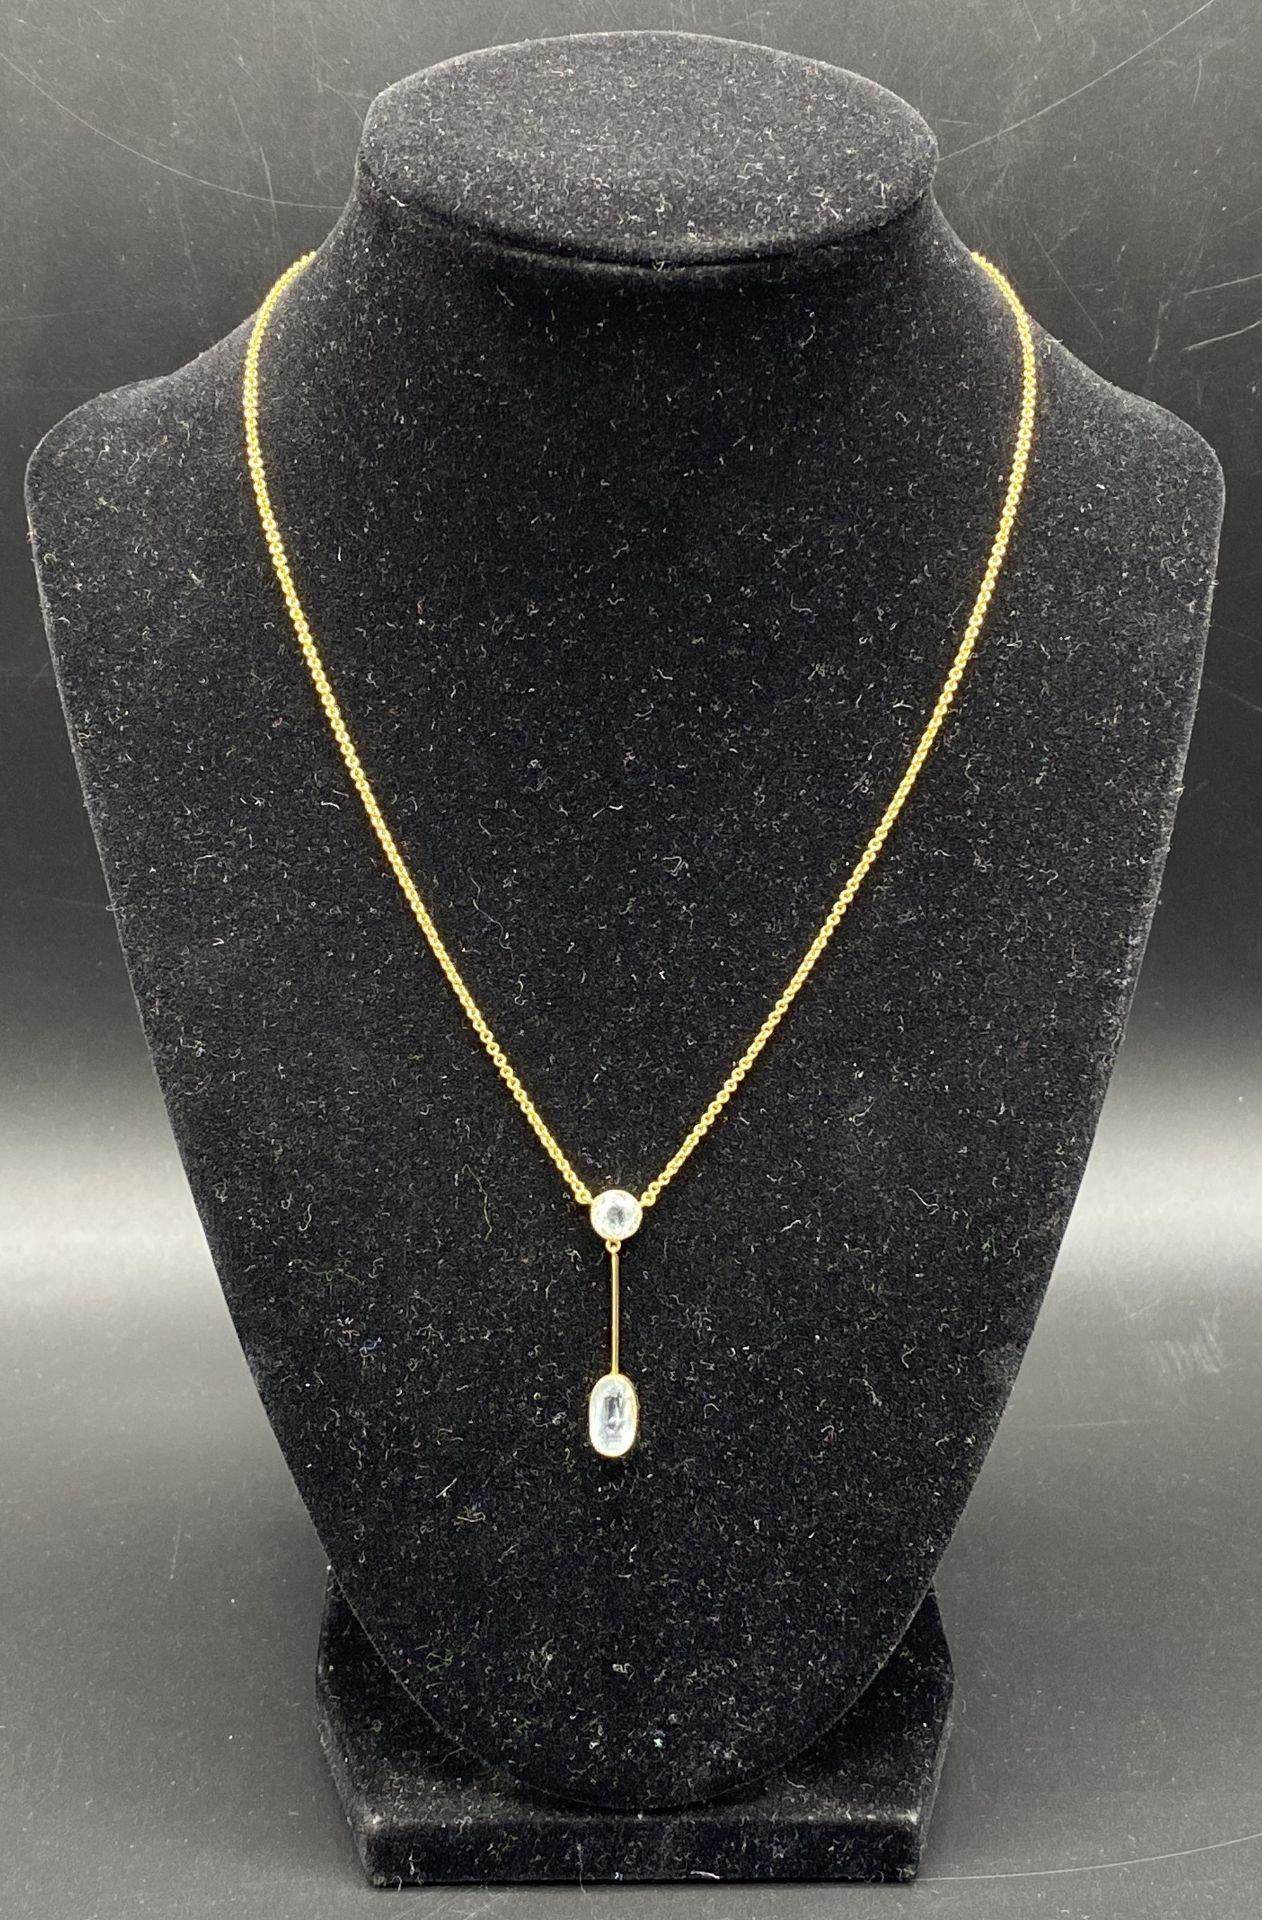 9ct gold necklace with aquamarine pendant